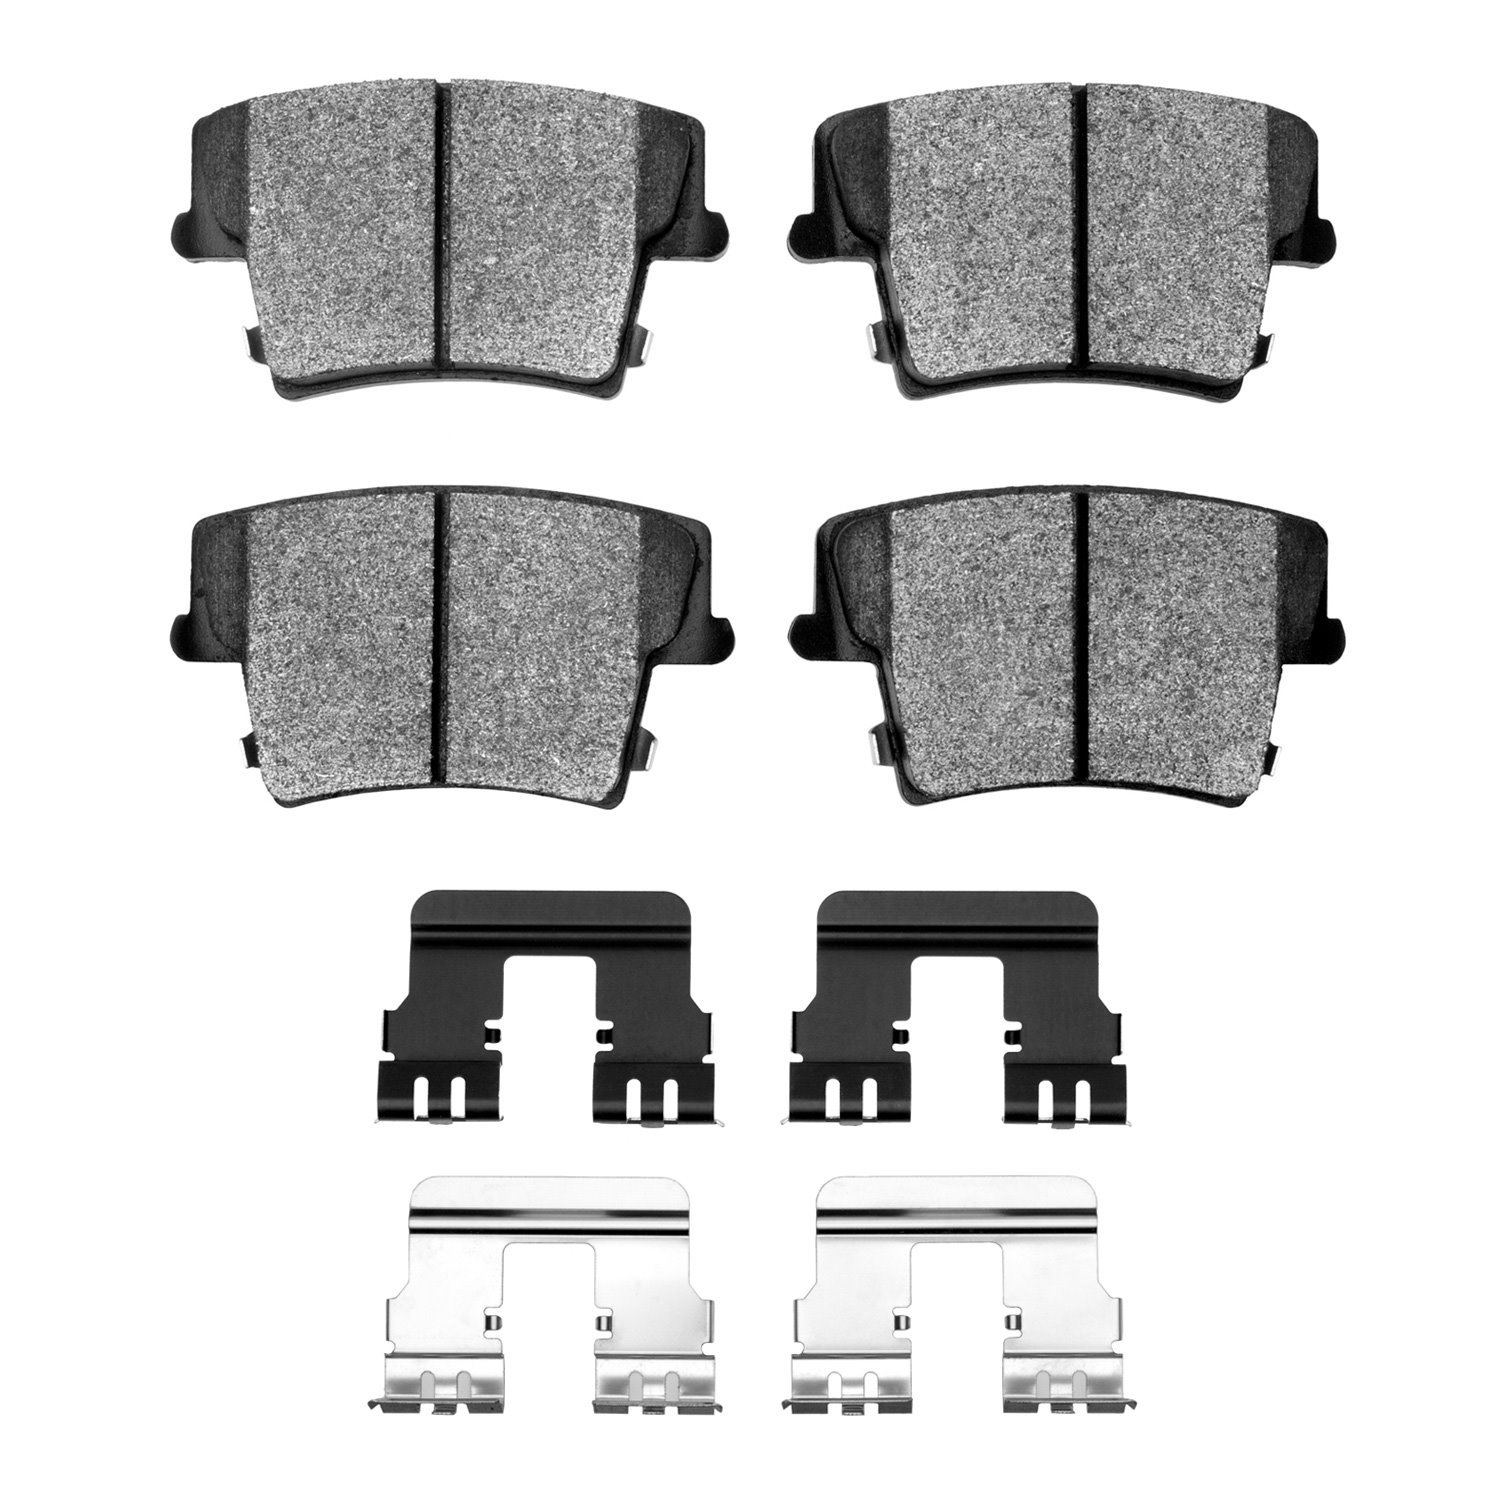 1310-1057-01 3000-Series Ceramic Brake Pads & Hardware Kit, Fits Select Mopar, Position: Rear